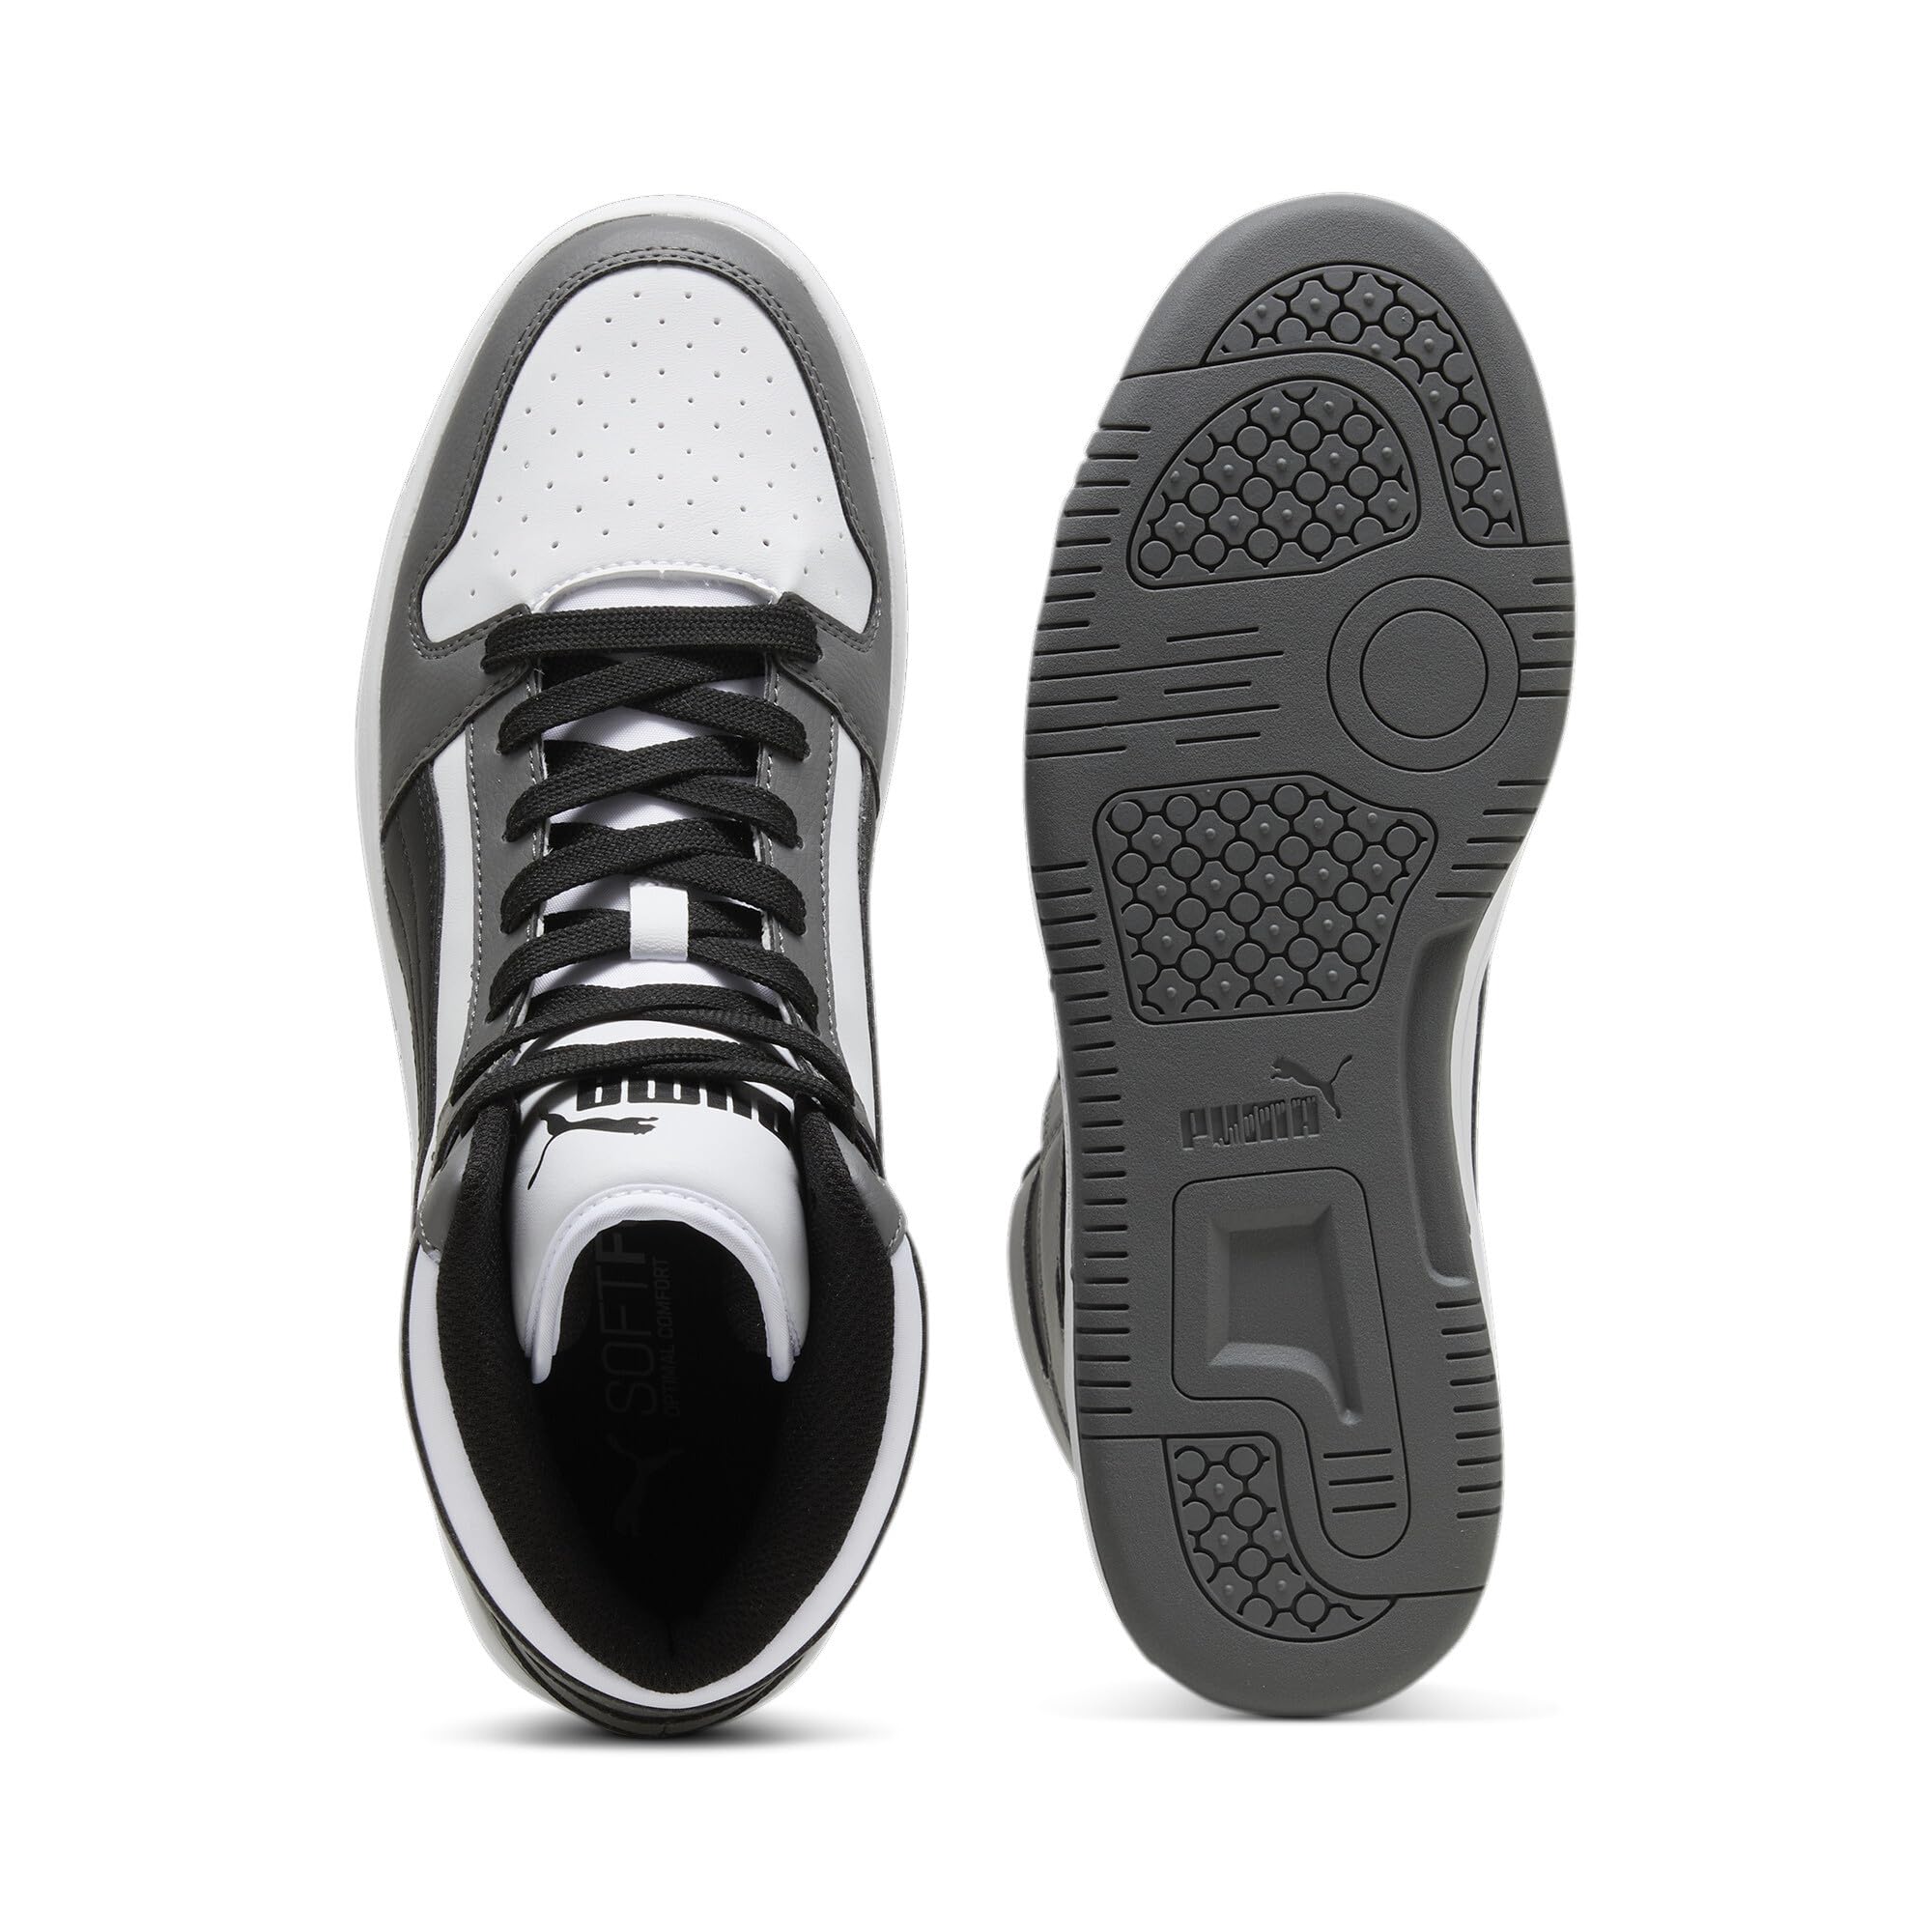 PUMA Men's Rebound Layup Sneaker, White Black-Cool Dark Gray, 10.5